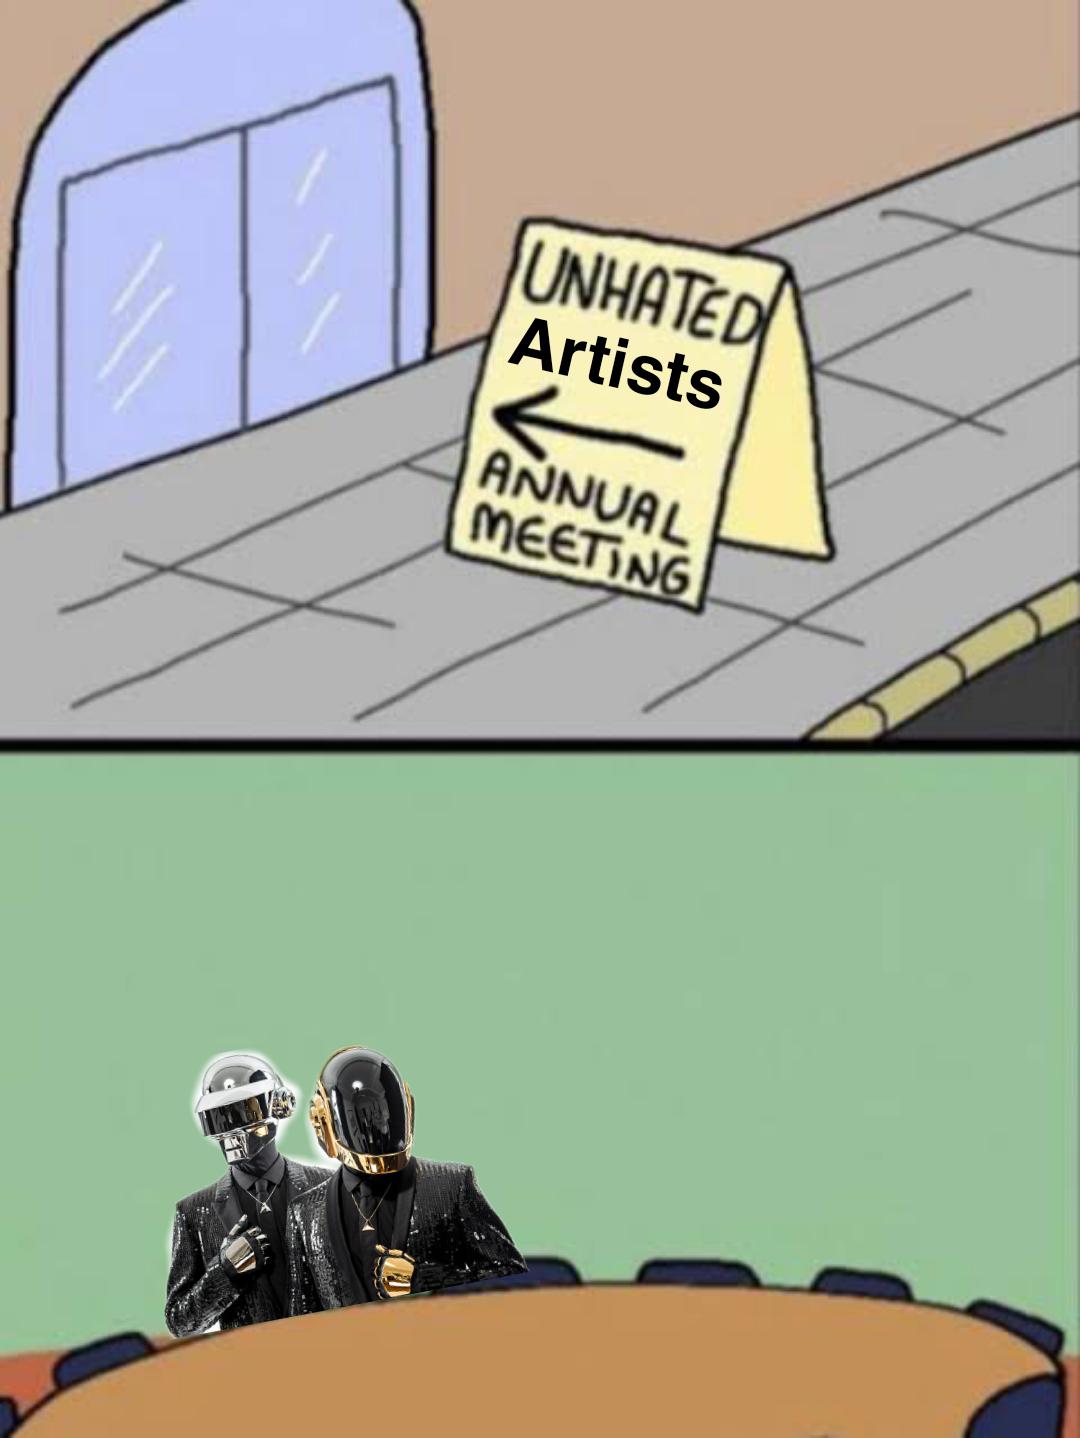 dank memes - cartoon - Unhated Artists Annual Meeting